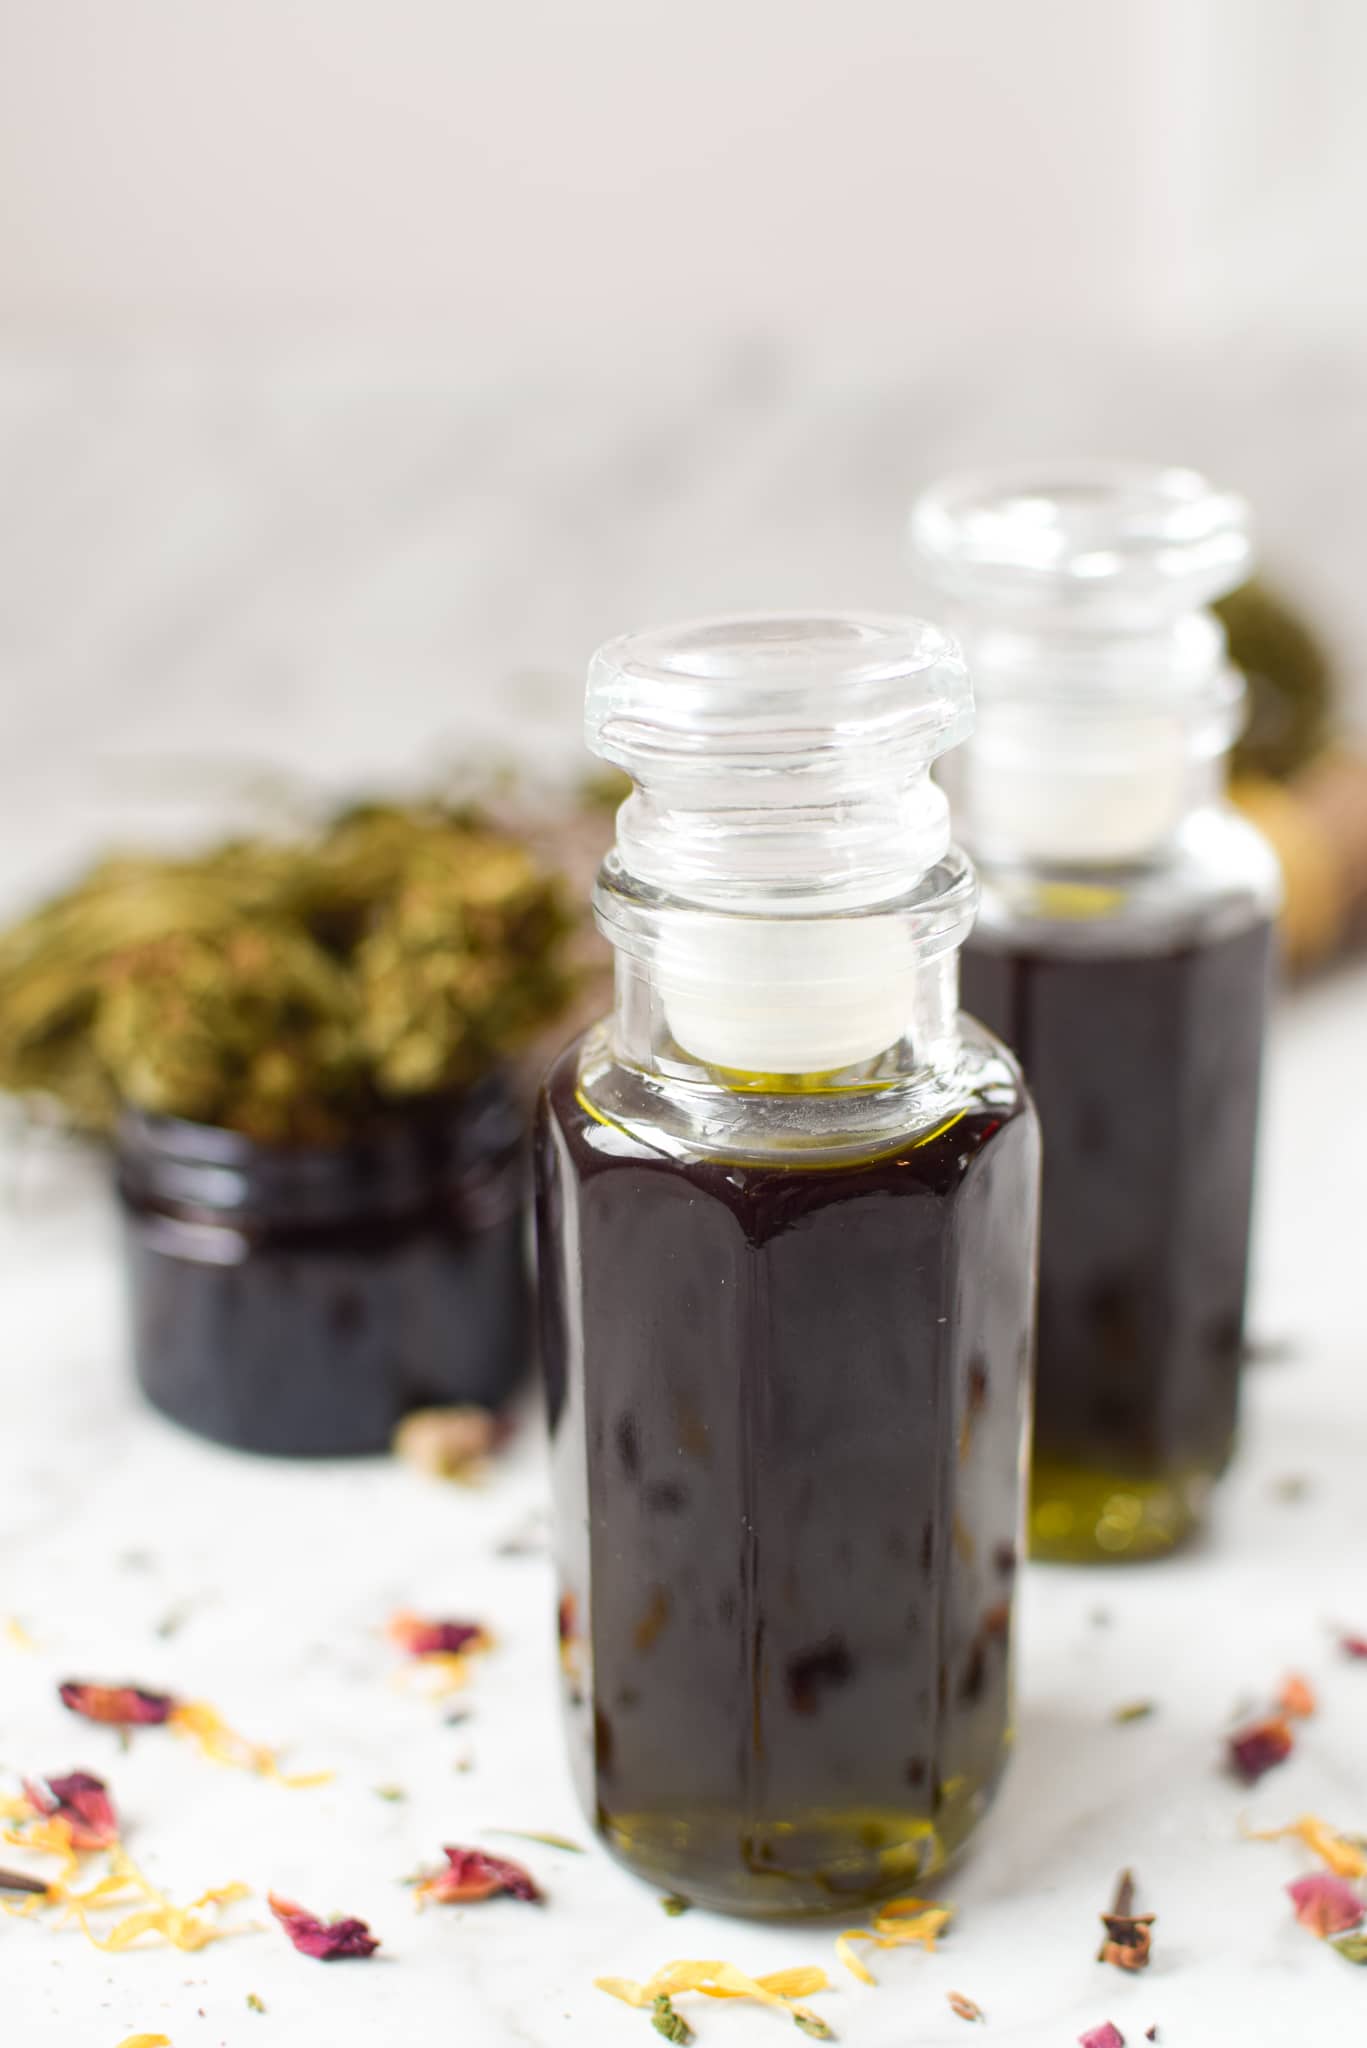 Cannabis Massage Oil